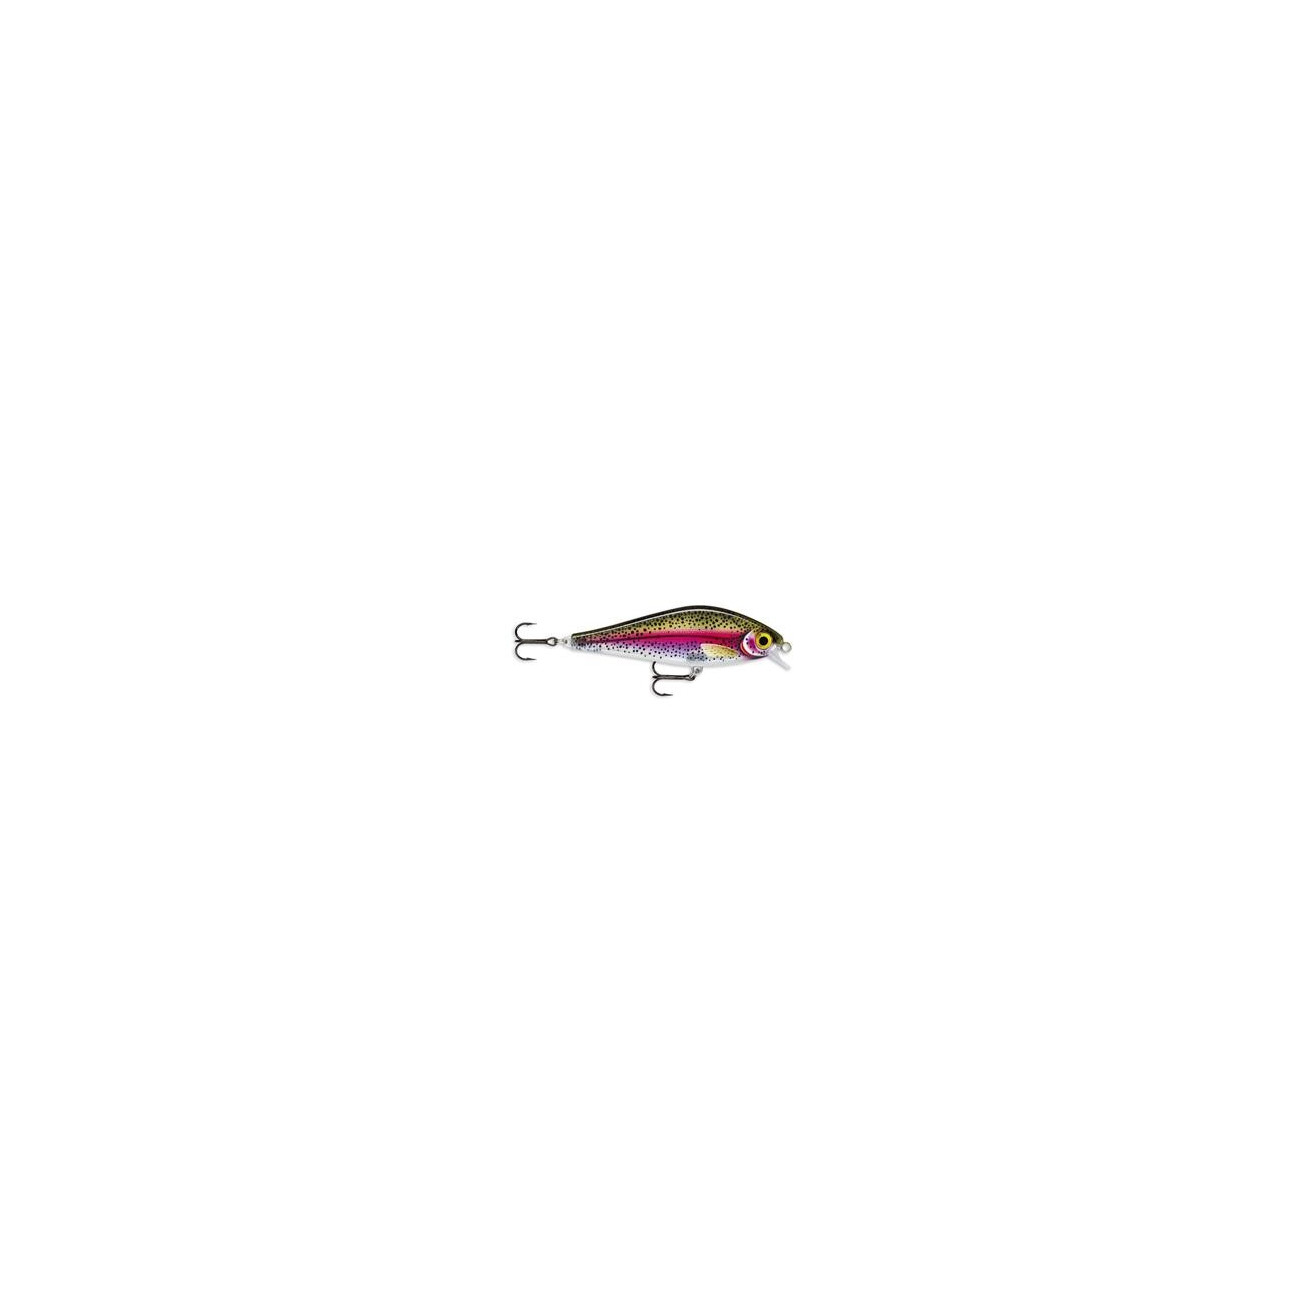 Köp din Rapala Super Shadow Rap 16 cm - Rainbow Trout online på Mieko  Fishing!